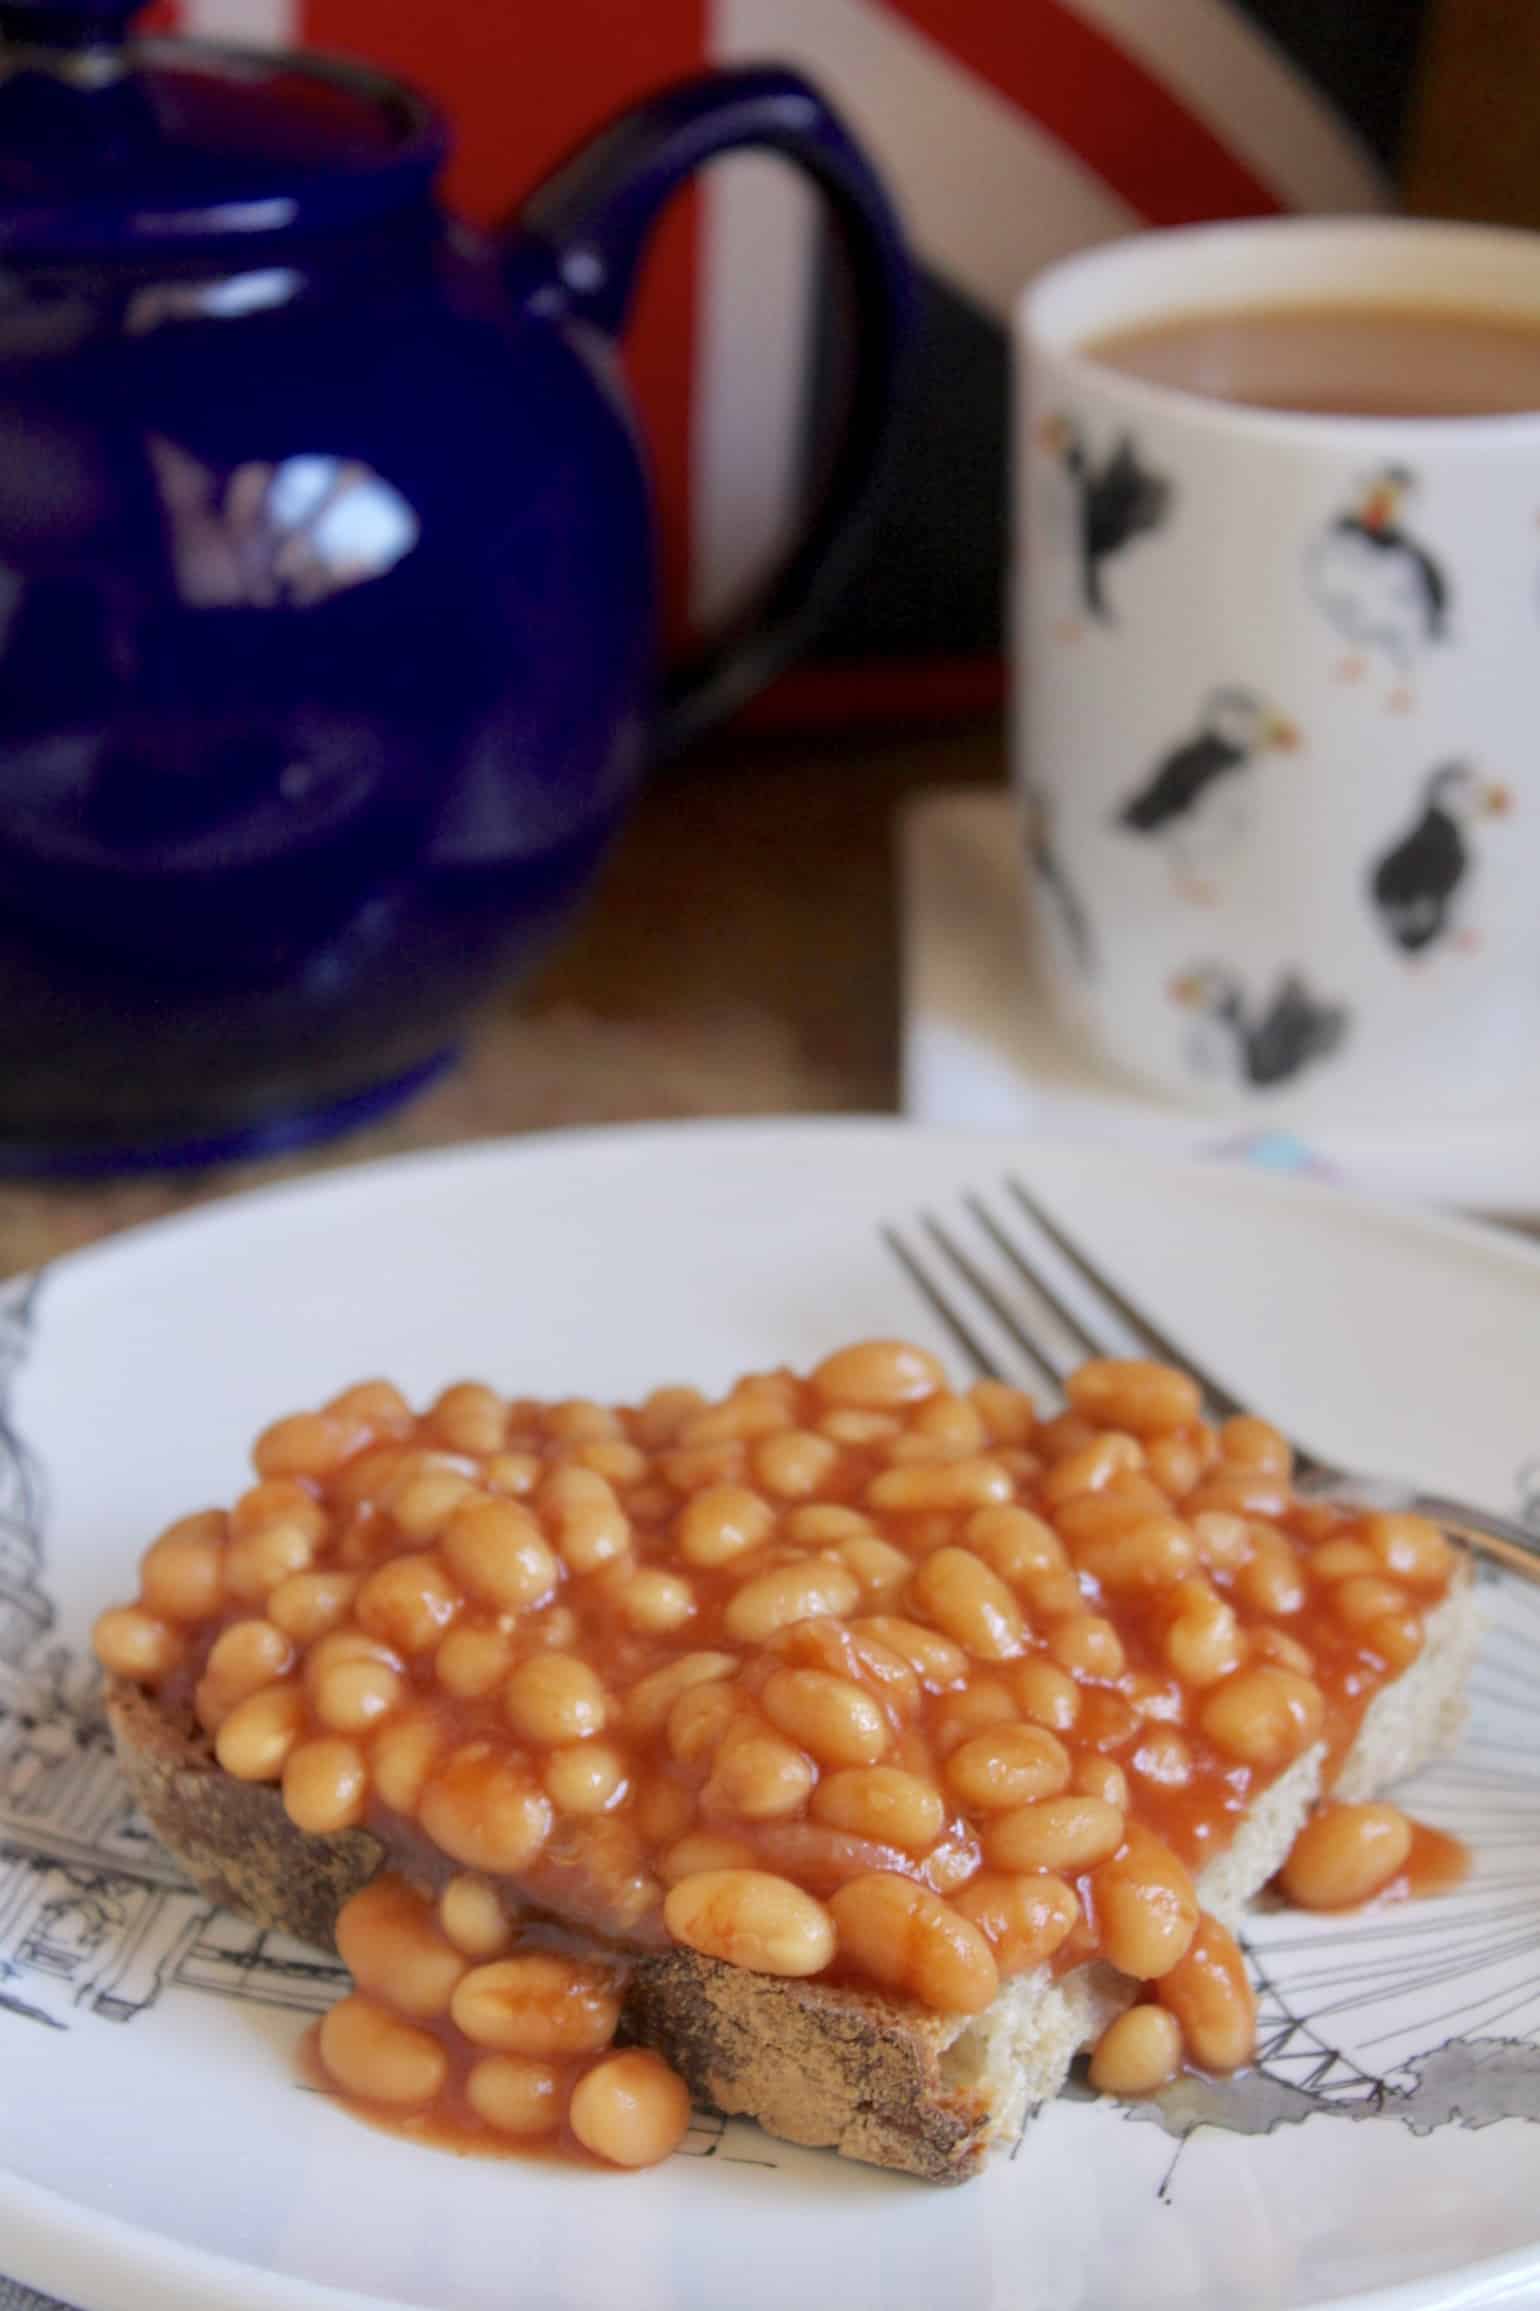 Beans on toast on a plate with tea